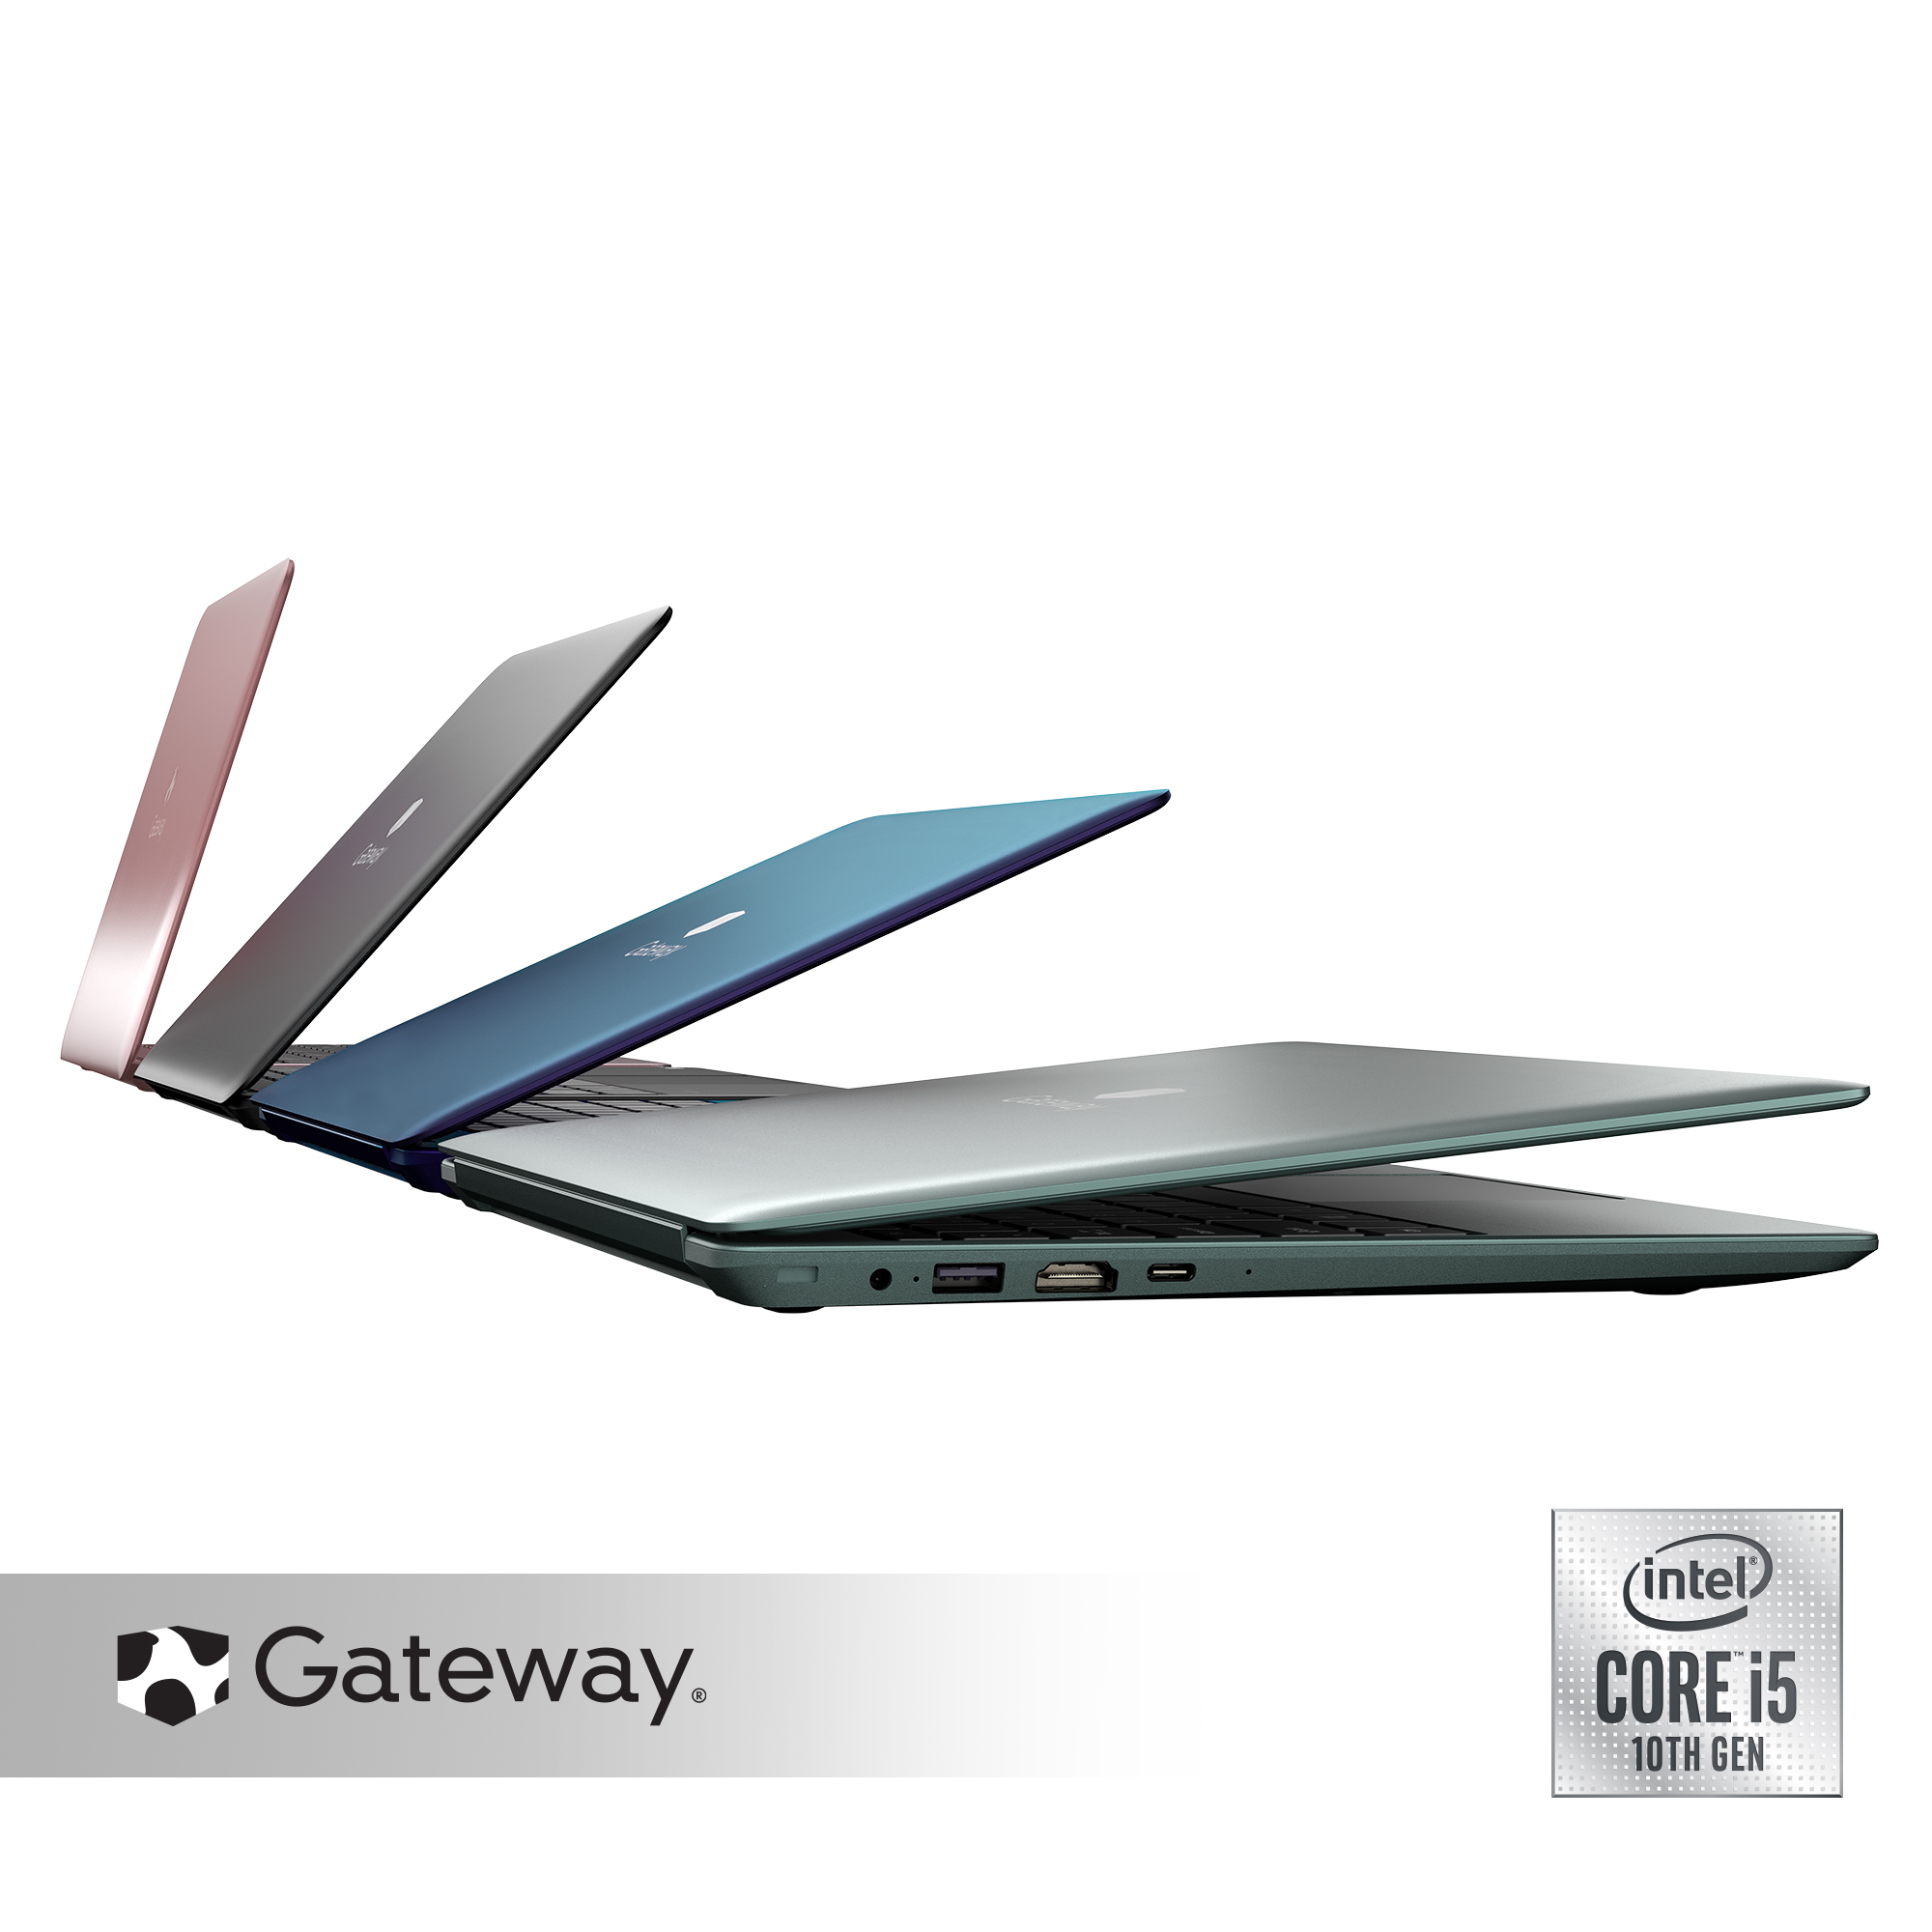 Gateway 15.6" 1080p PC Laptop, Intel Core i5, 16GB RAM, 256GB SSD, Windows 10, Black, GWTN156-1BK - image 1 of 3